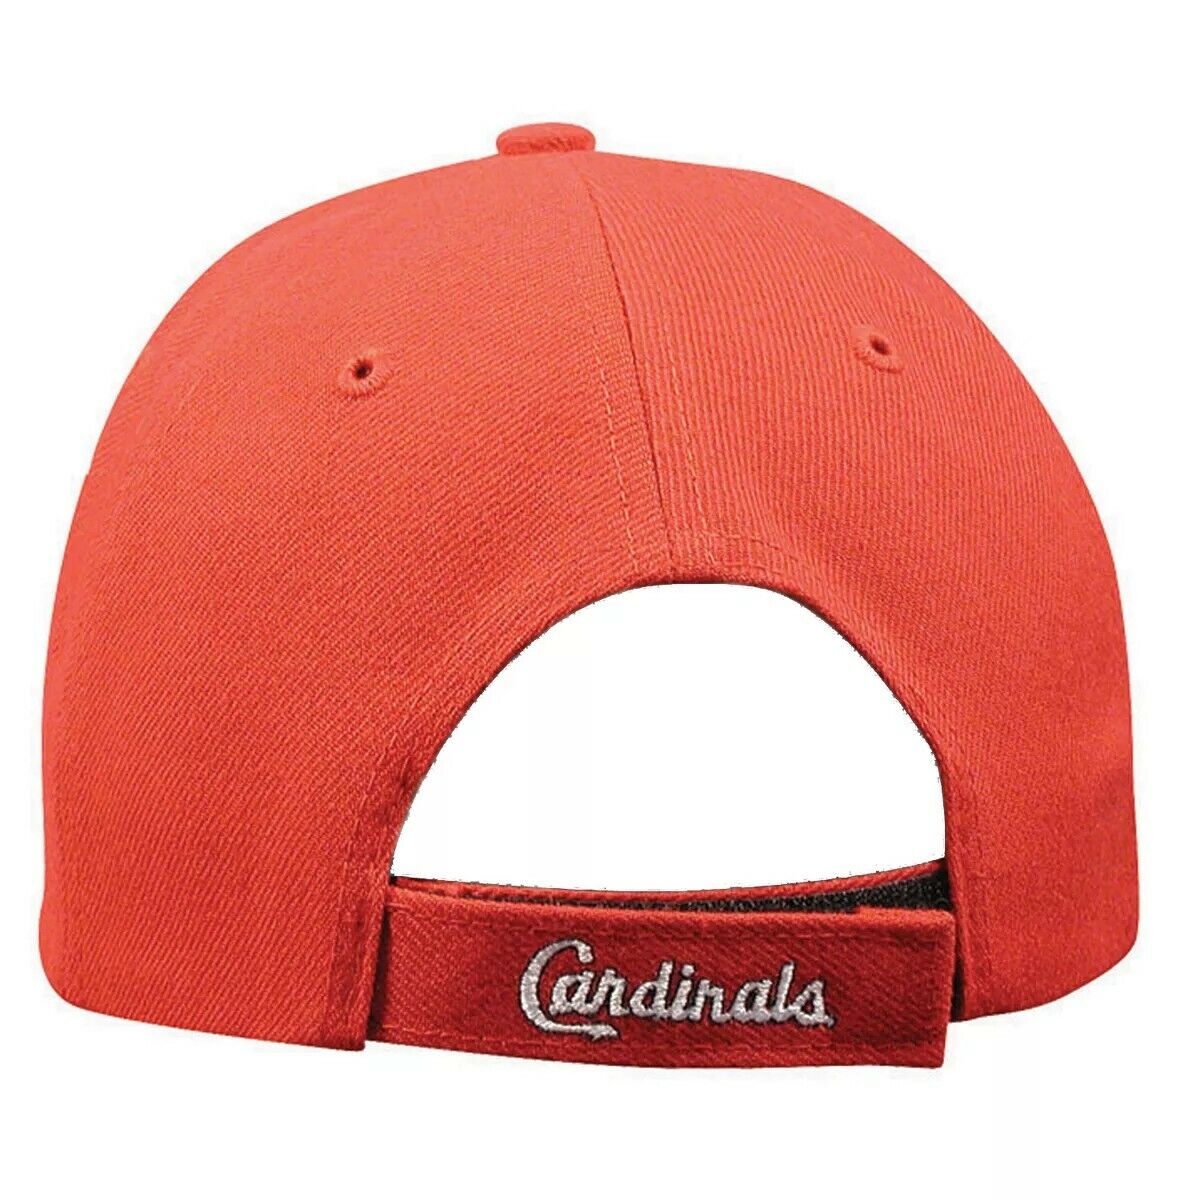 St. Louis Cardinals '47 Brand Wool Replica Baseball Cap - Red